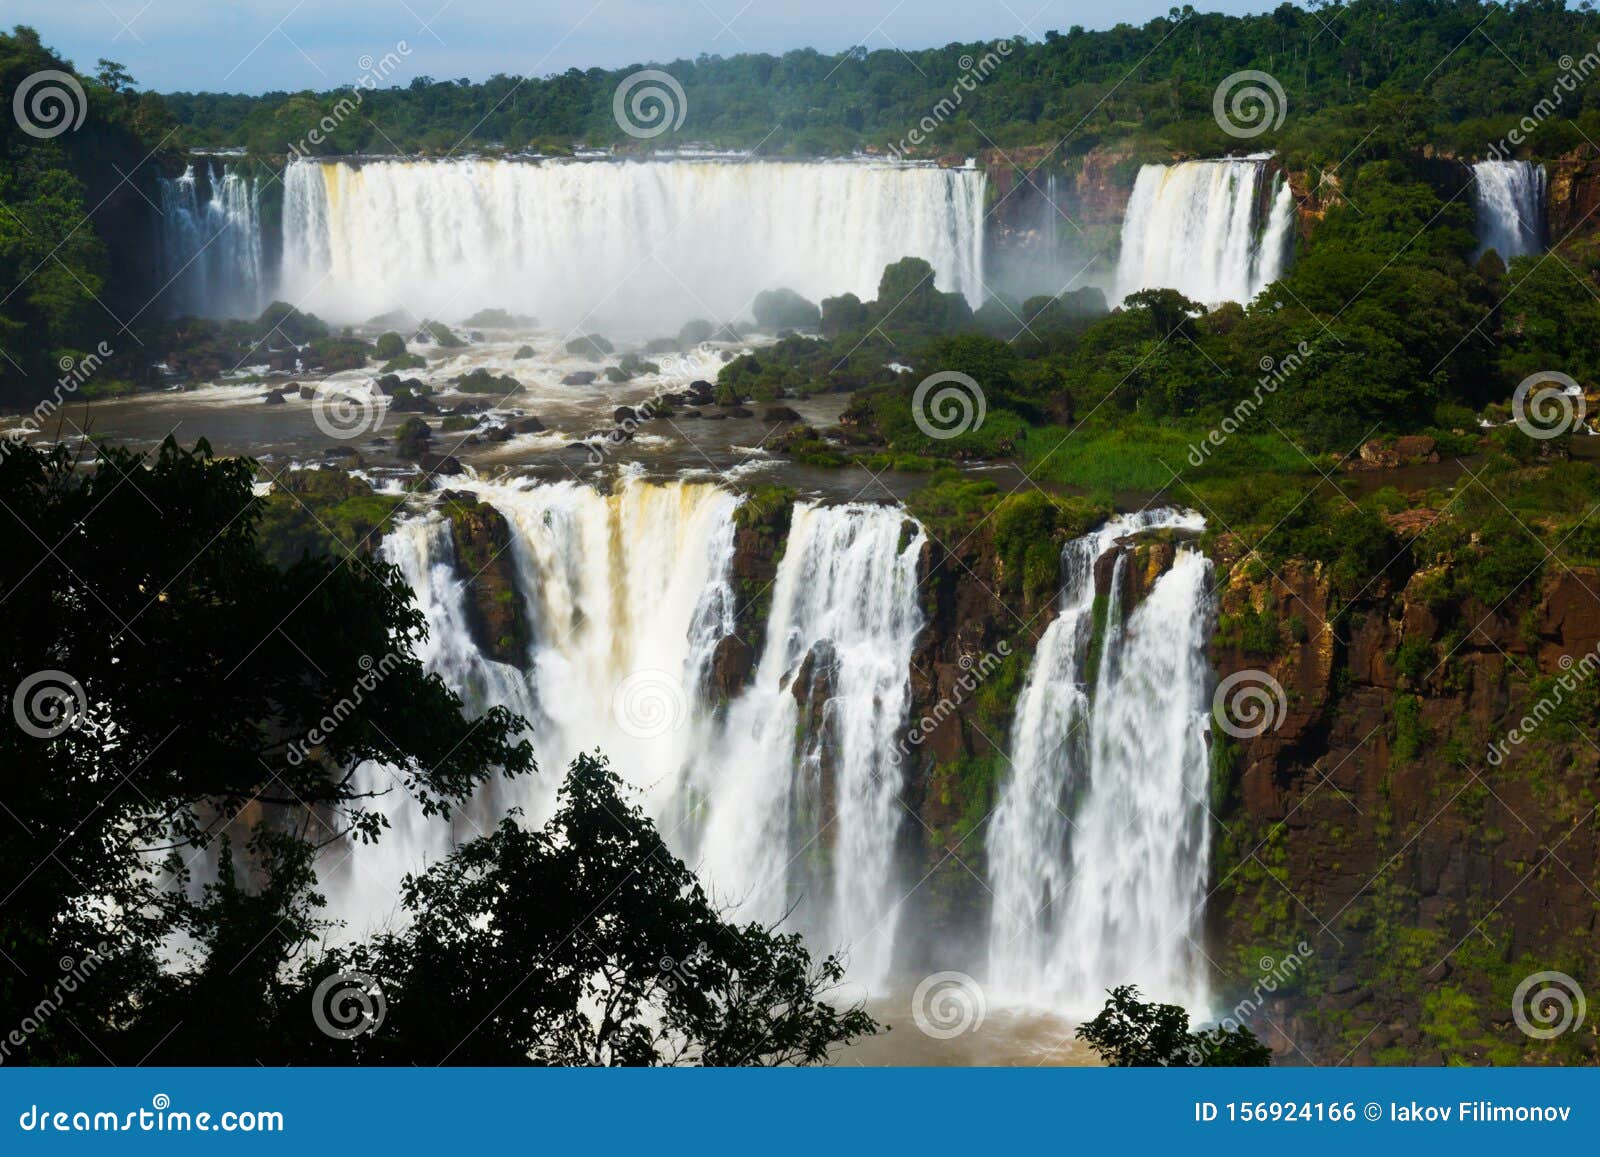 waterfall cataratas del iguazu on iguazu river, brazil